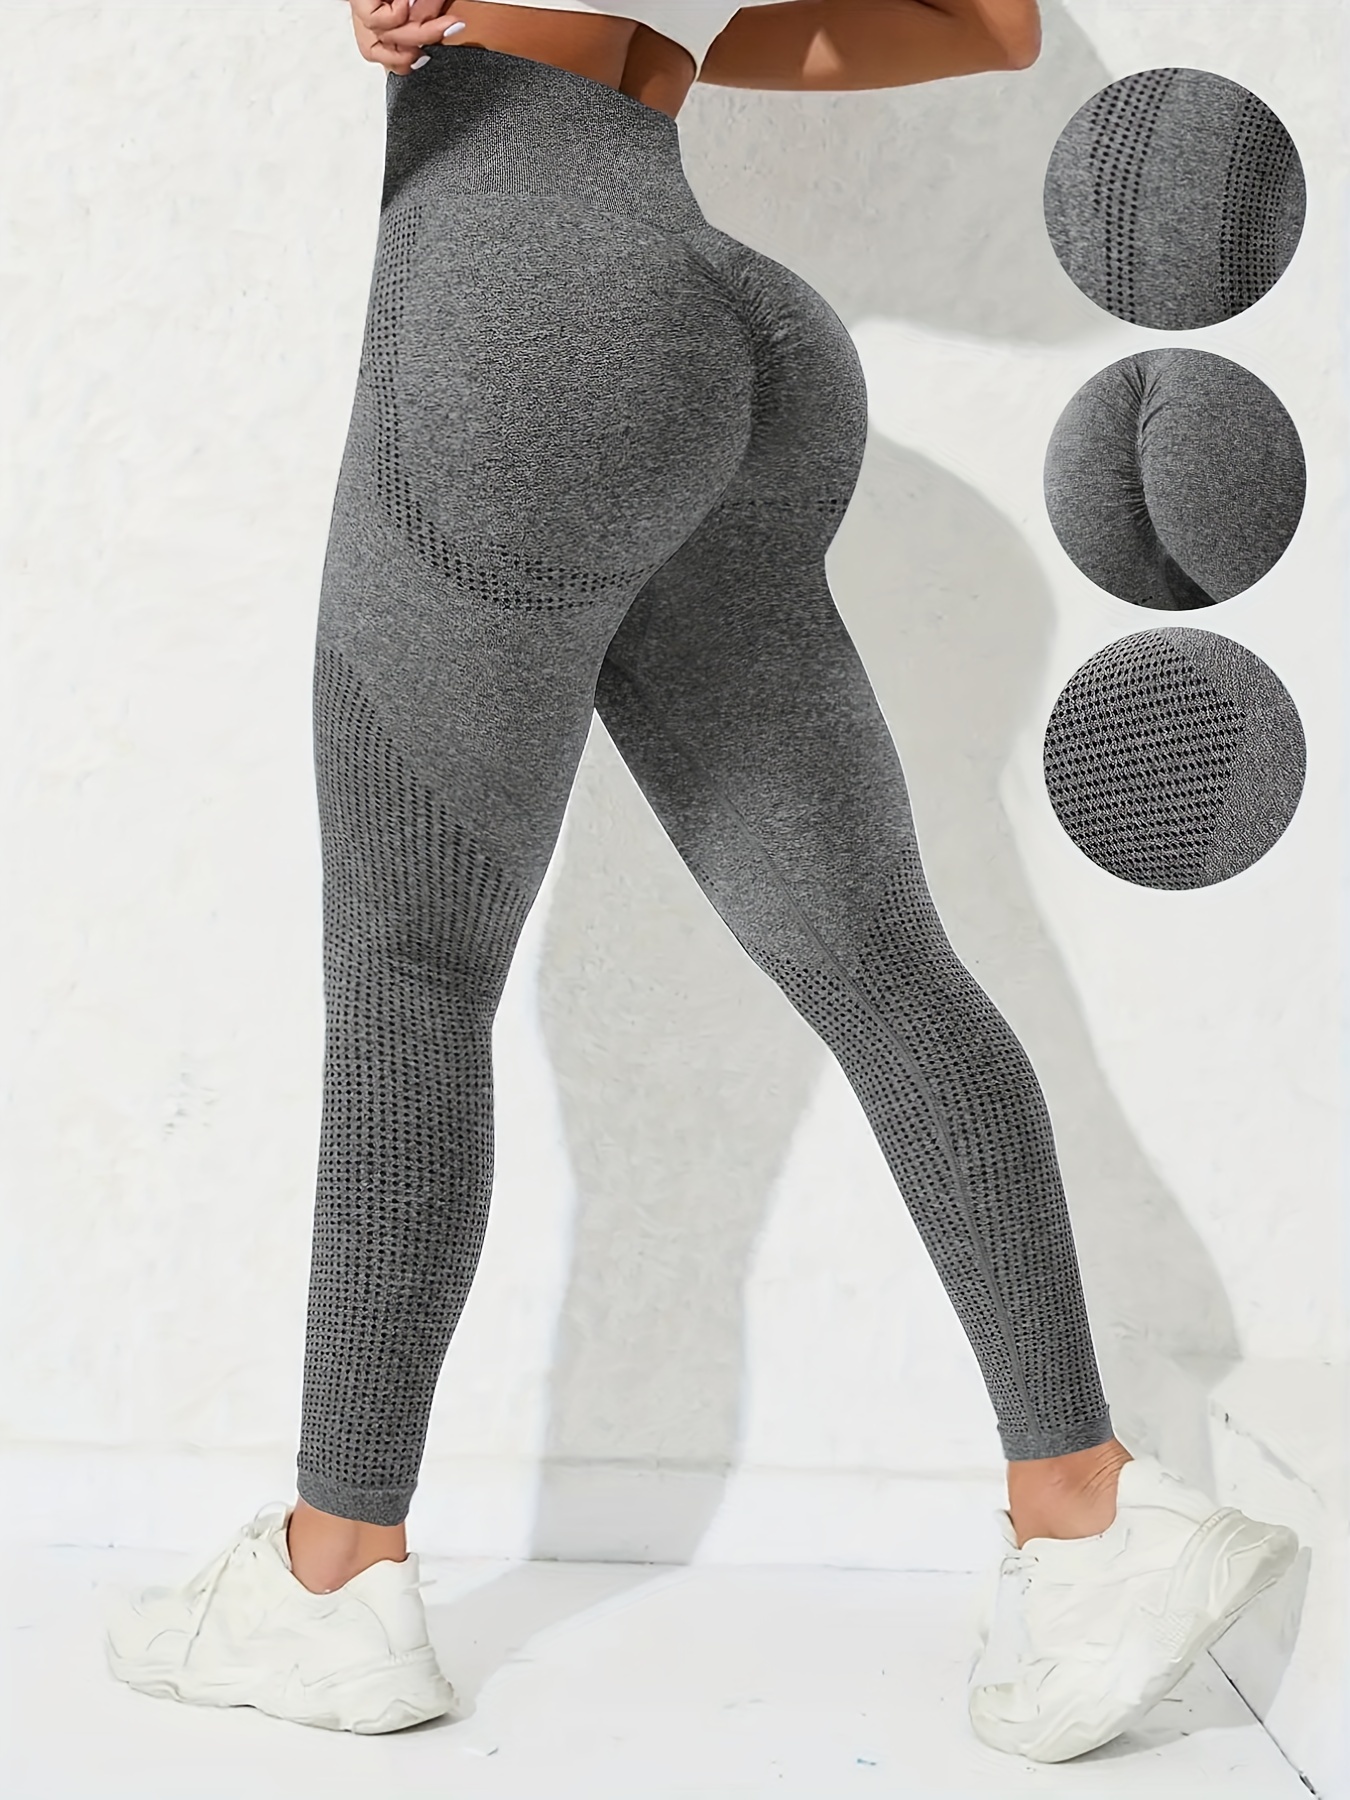 QOQ Women's Seamless High Waist Leggings Tummy Control Yoga Pants